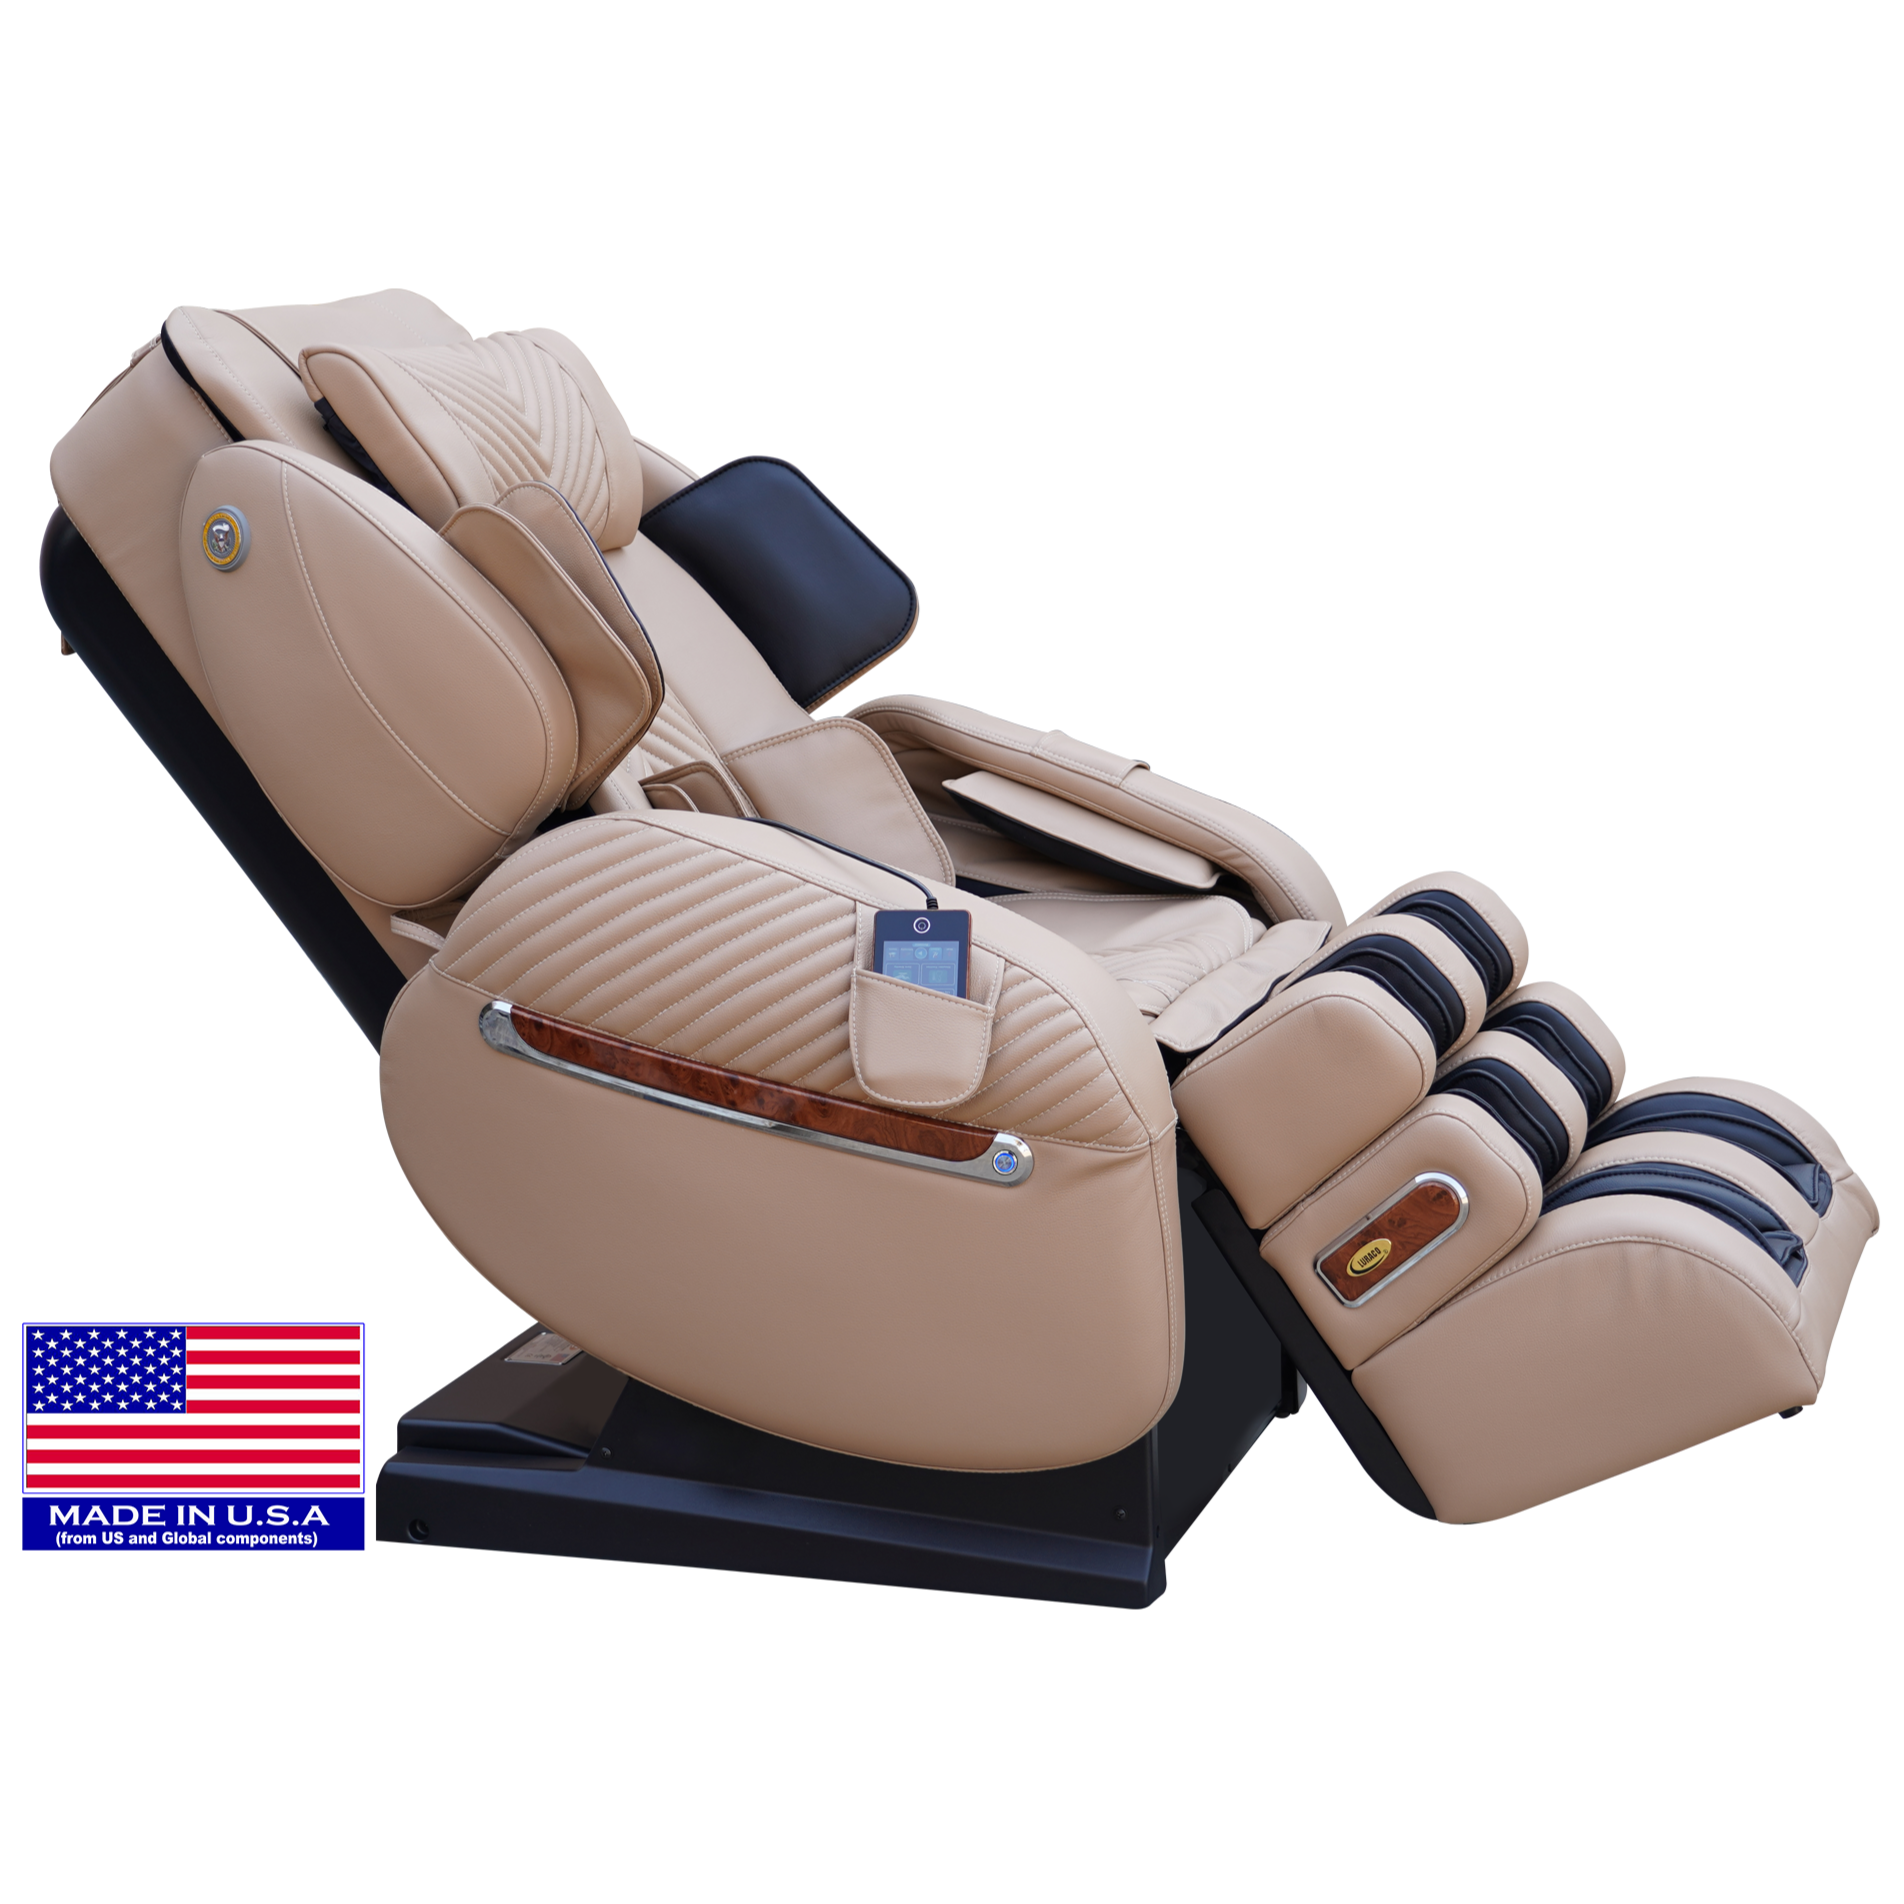 Luraco iRobotics 9 Max Massage Chair